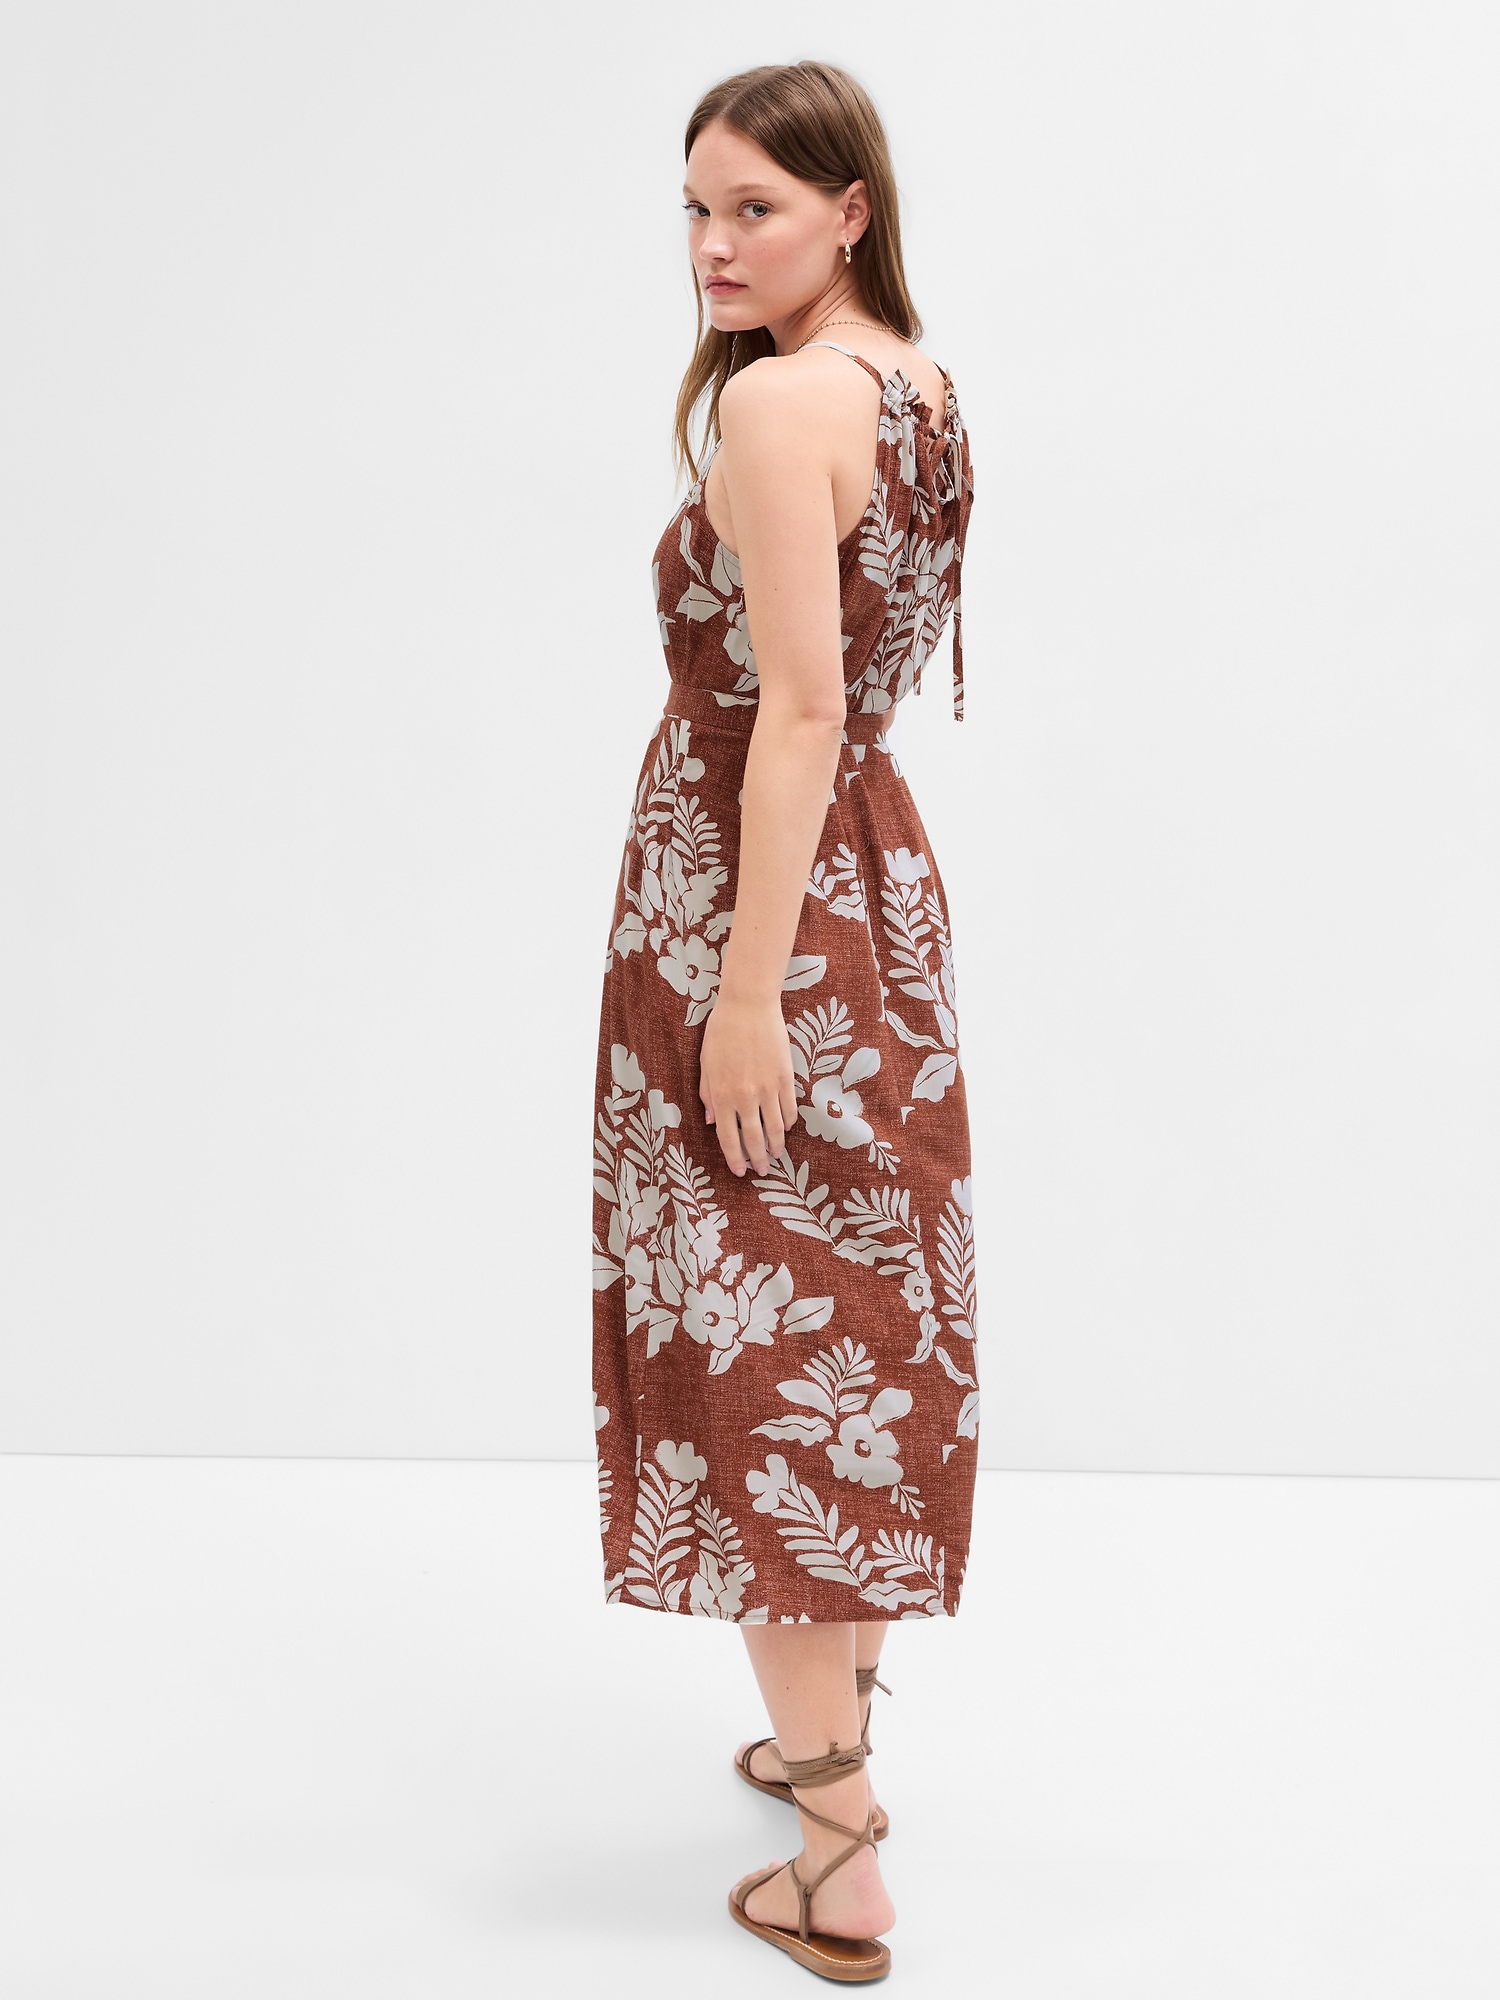 Relaxed Print Halter Midi Dress | Gap Factory